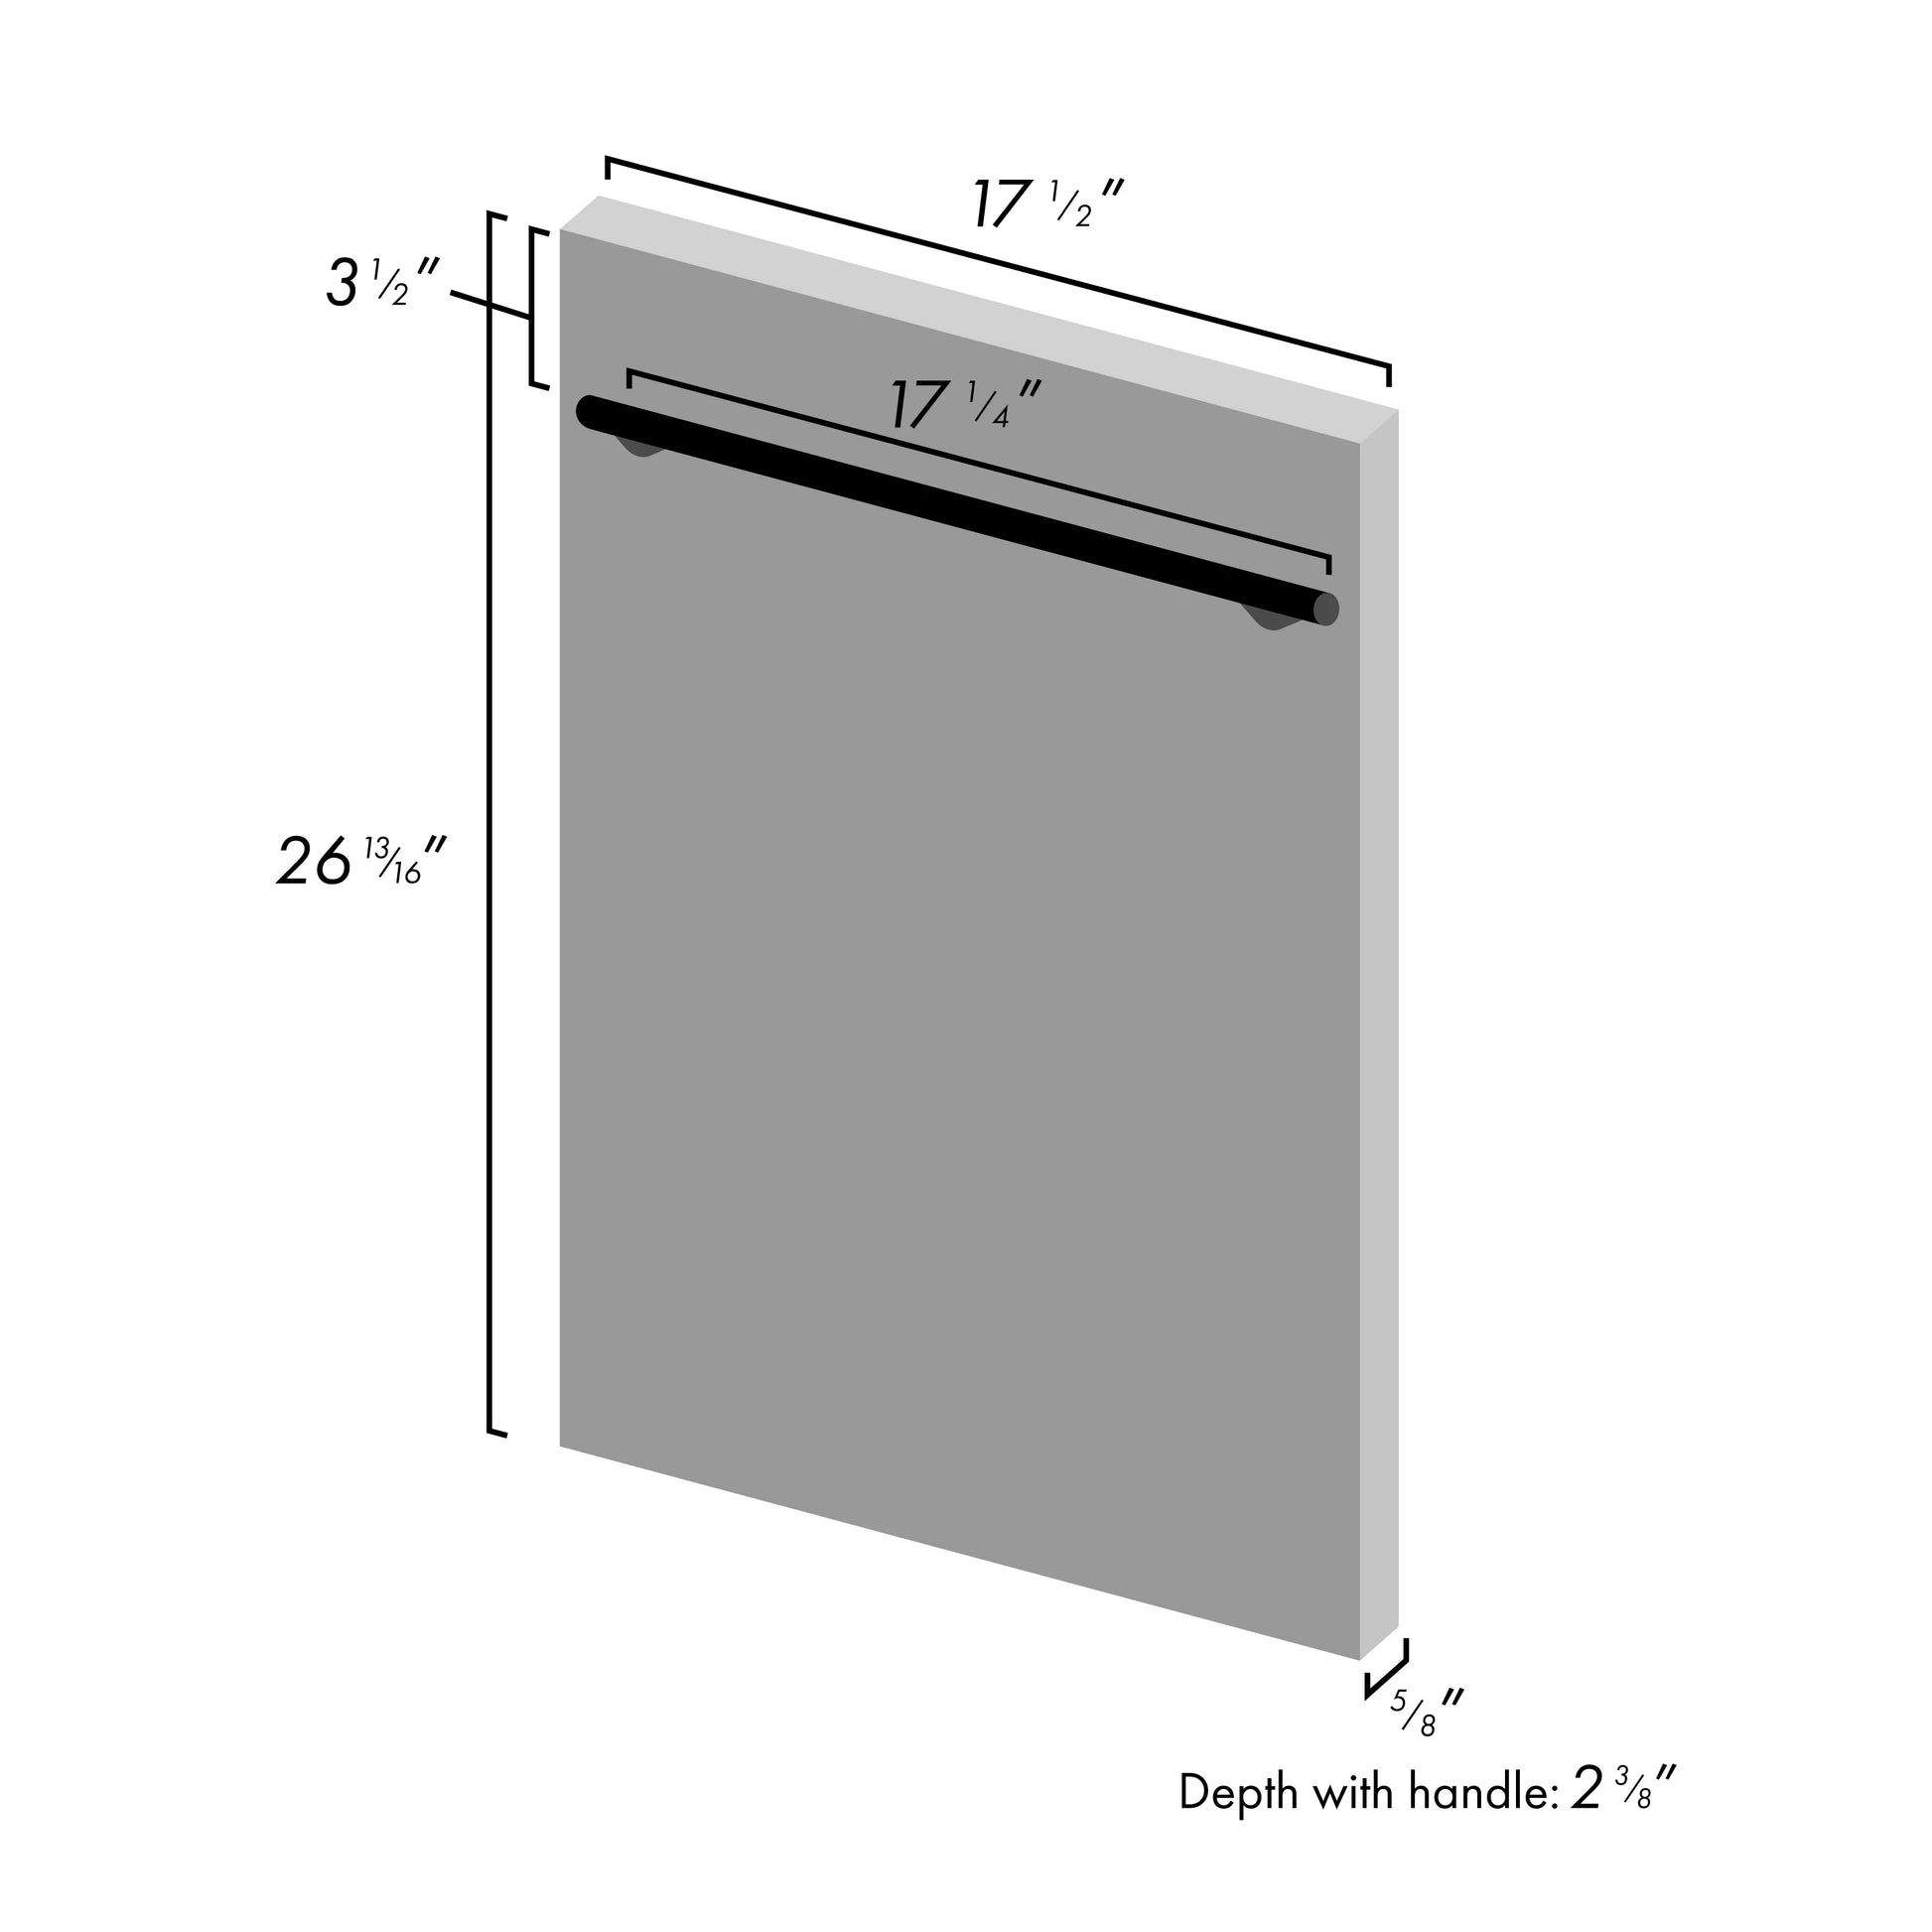 ZLINE 18" Compact Top Control Dishwasher - Matte Black Panel, Modern Handle